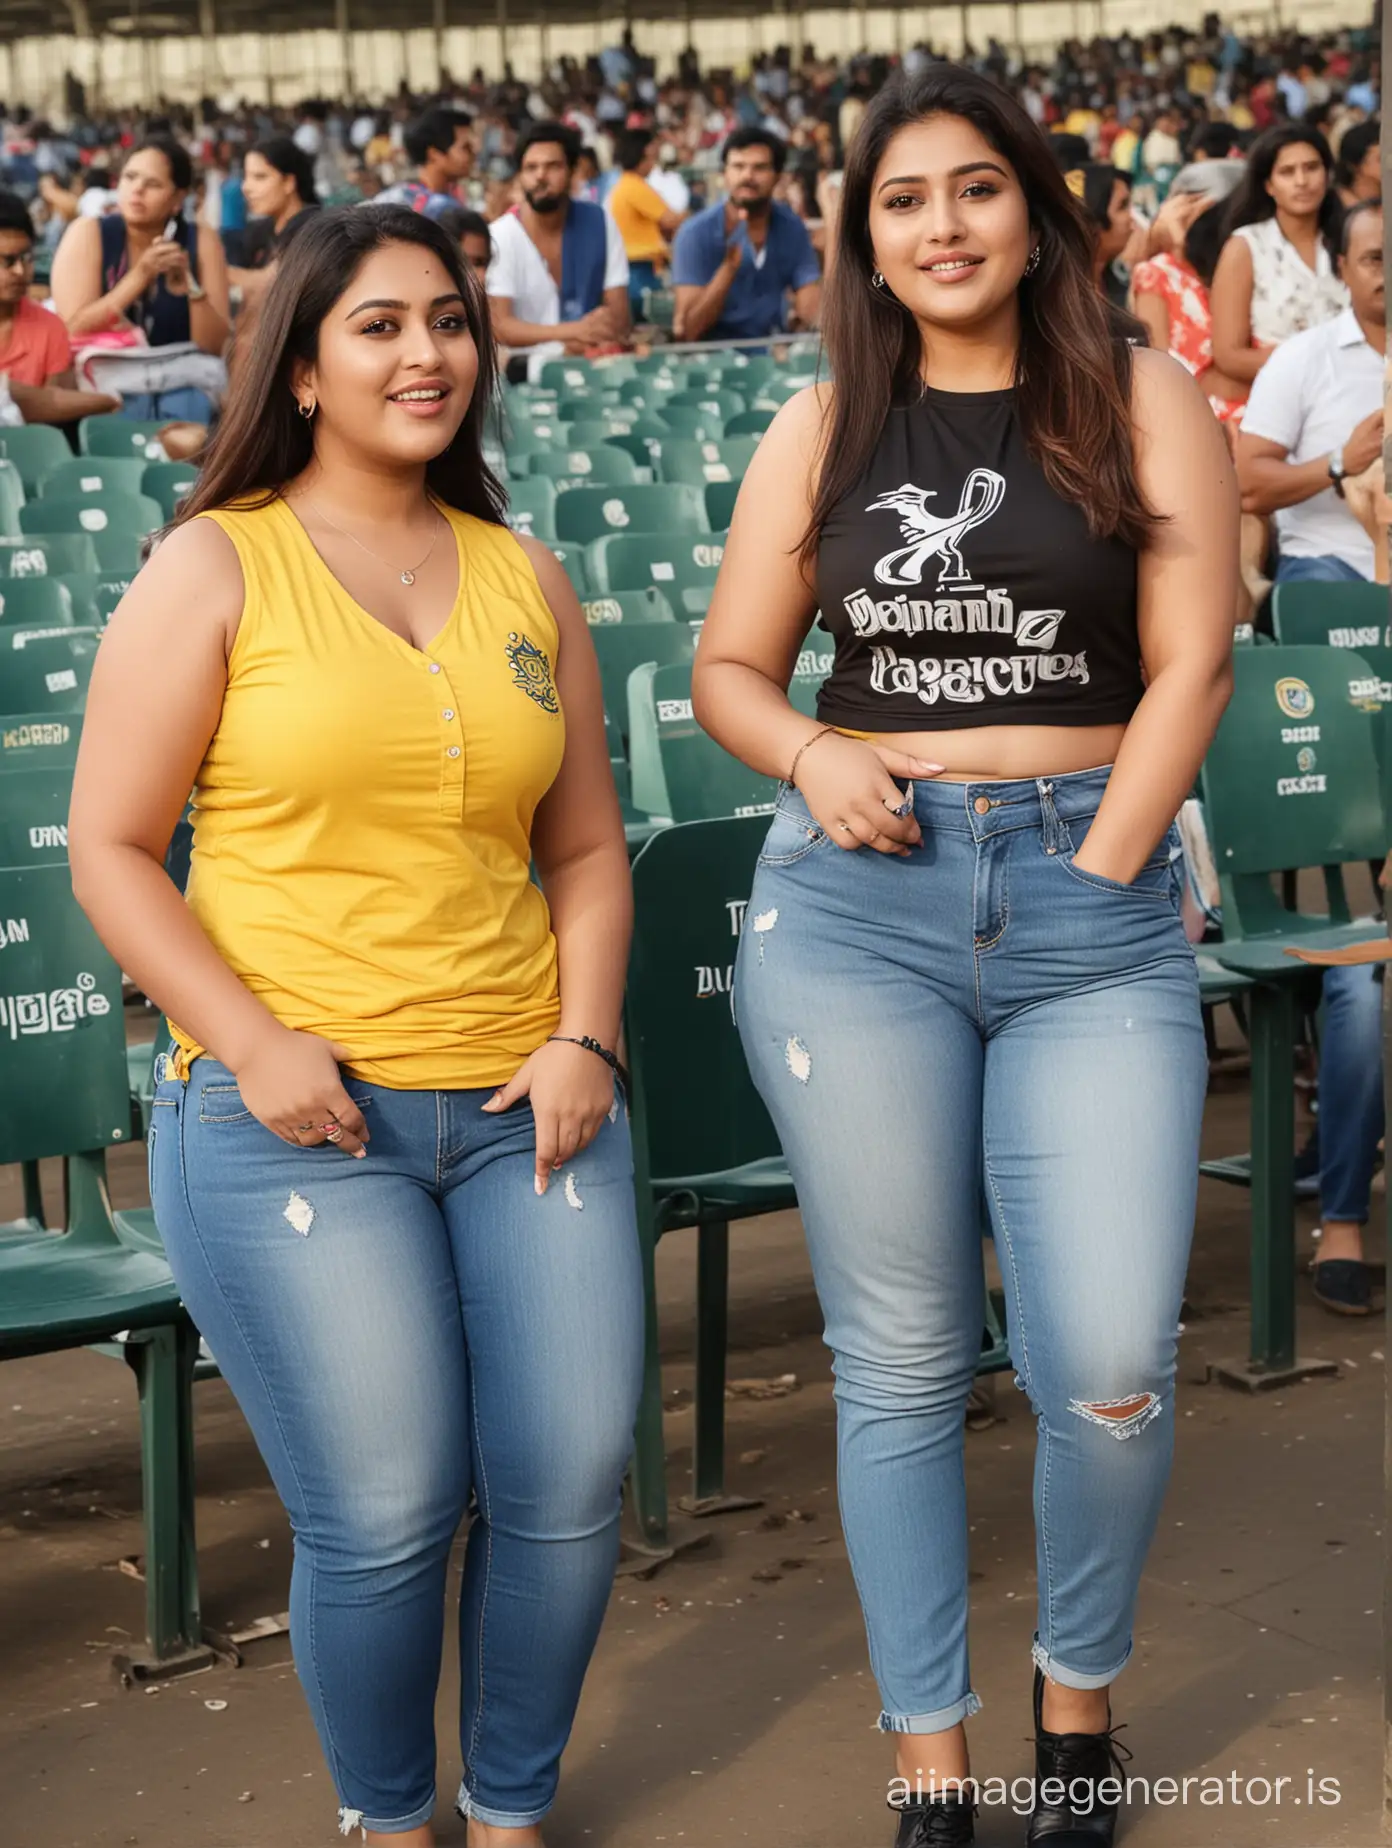 Indian-Plus-Size-Women-in-Sleeveless-Tops-and-Jeans-Enjoying-IPL-Cricket-at-Stadium